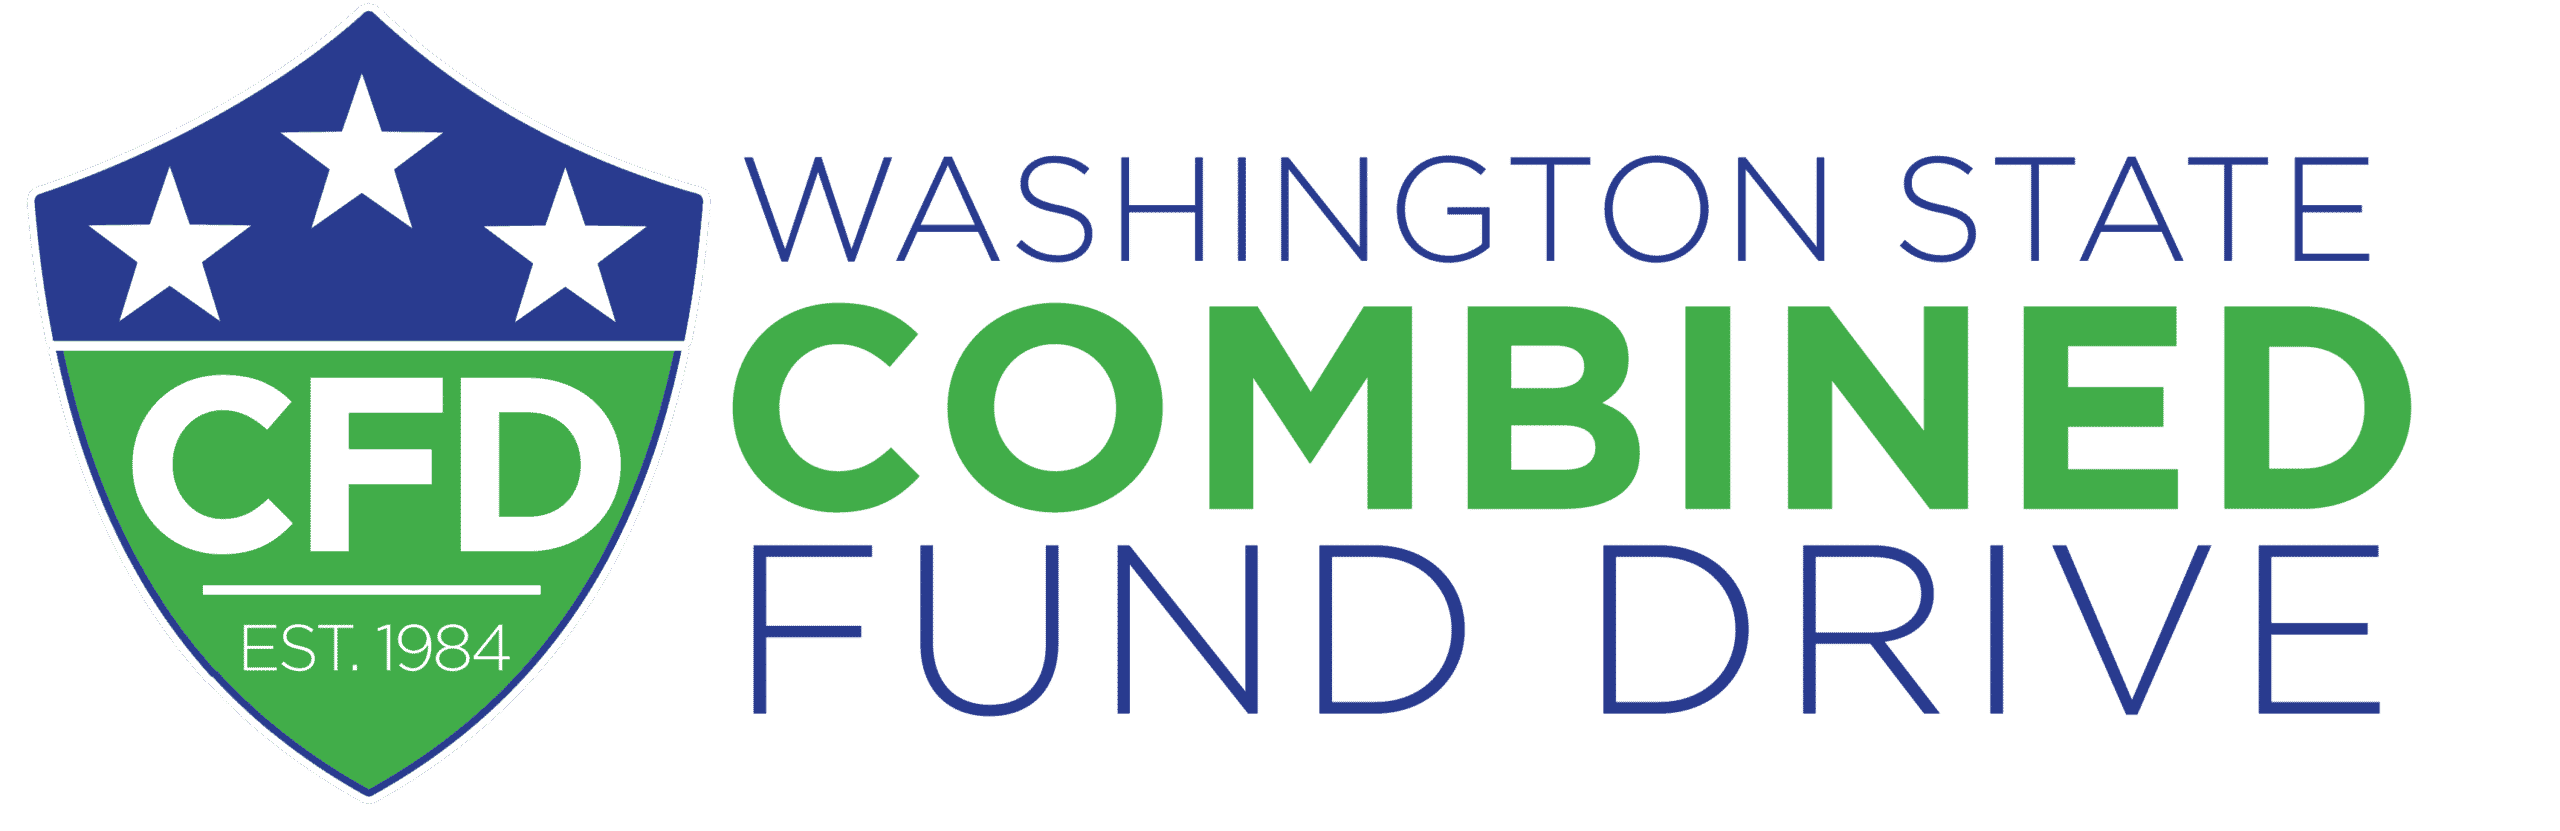 WA Stated Combined Fund Drive